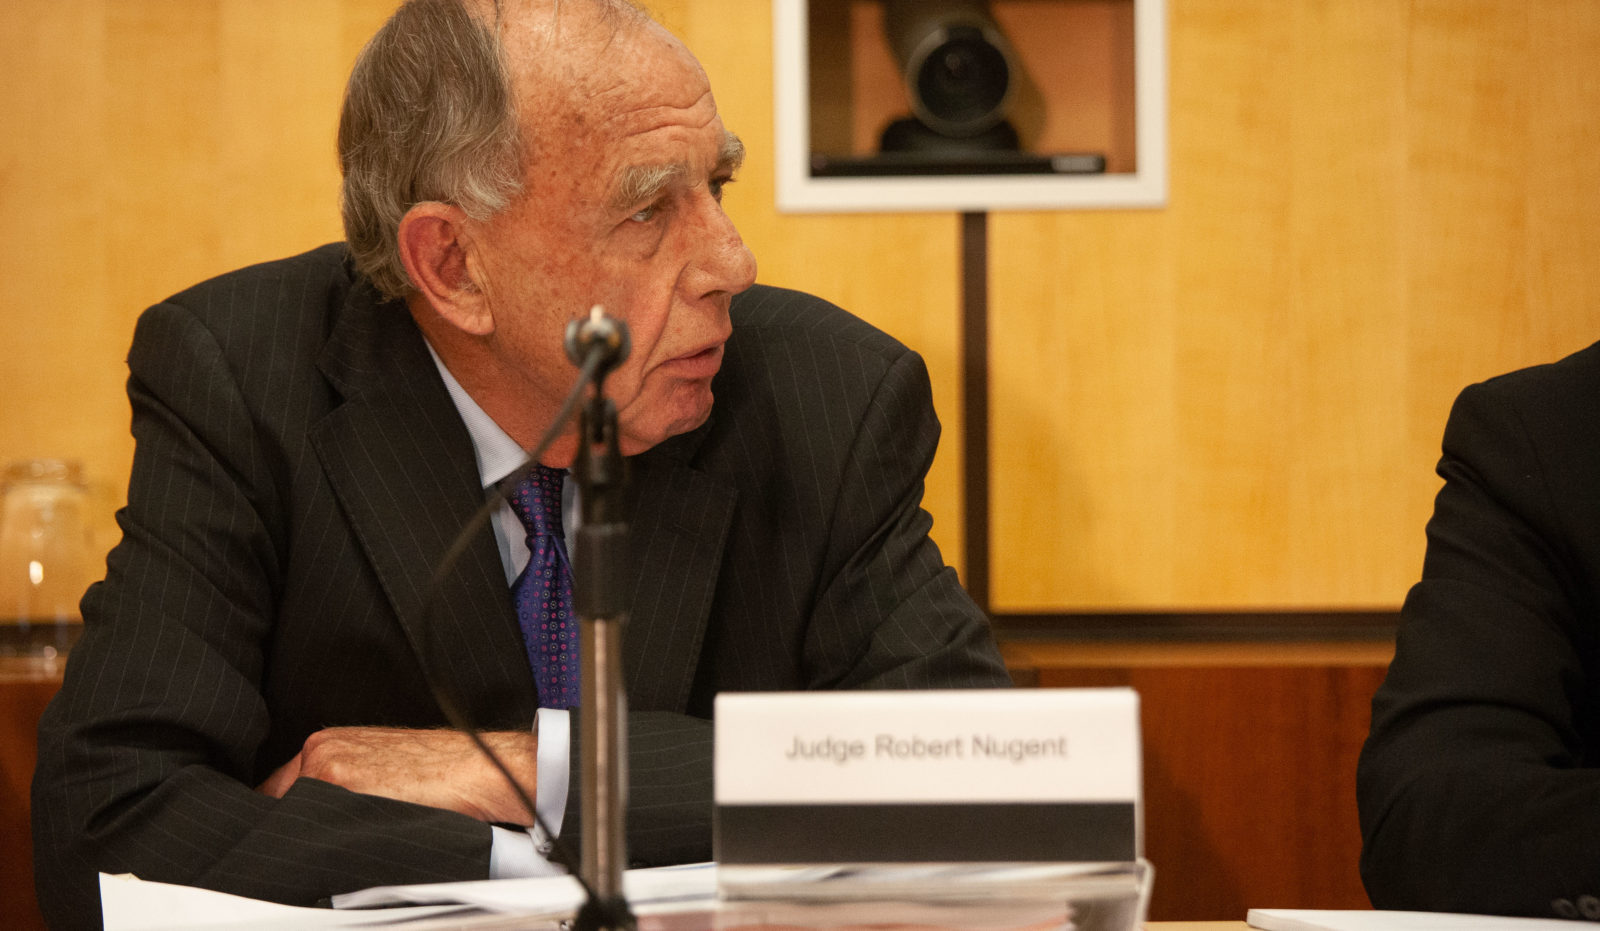 Judge Robert Nugent